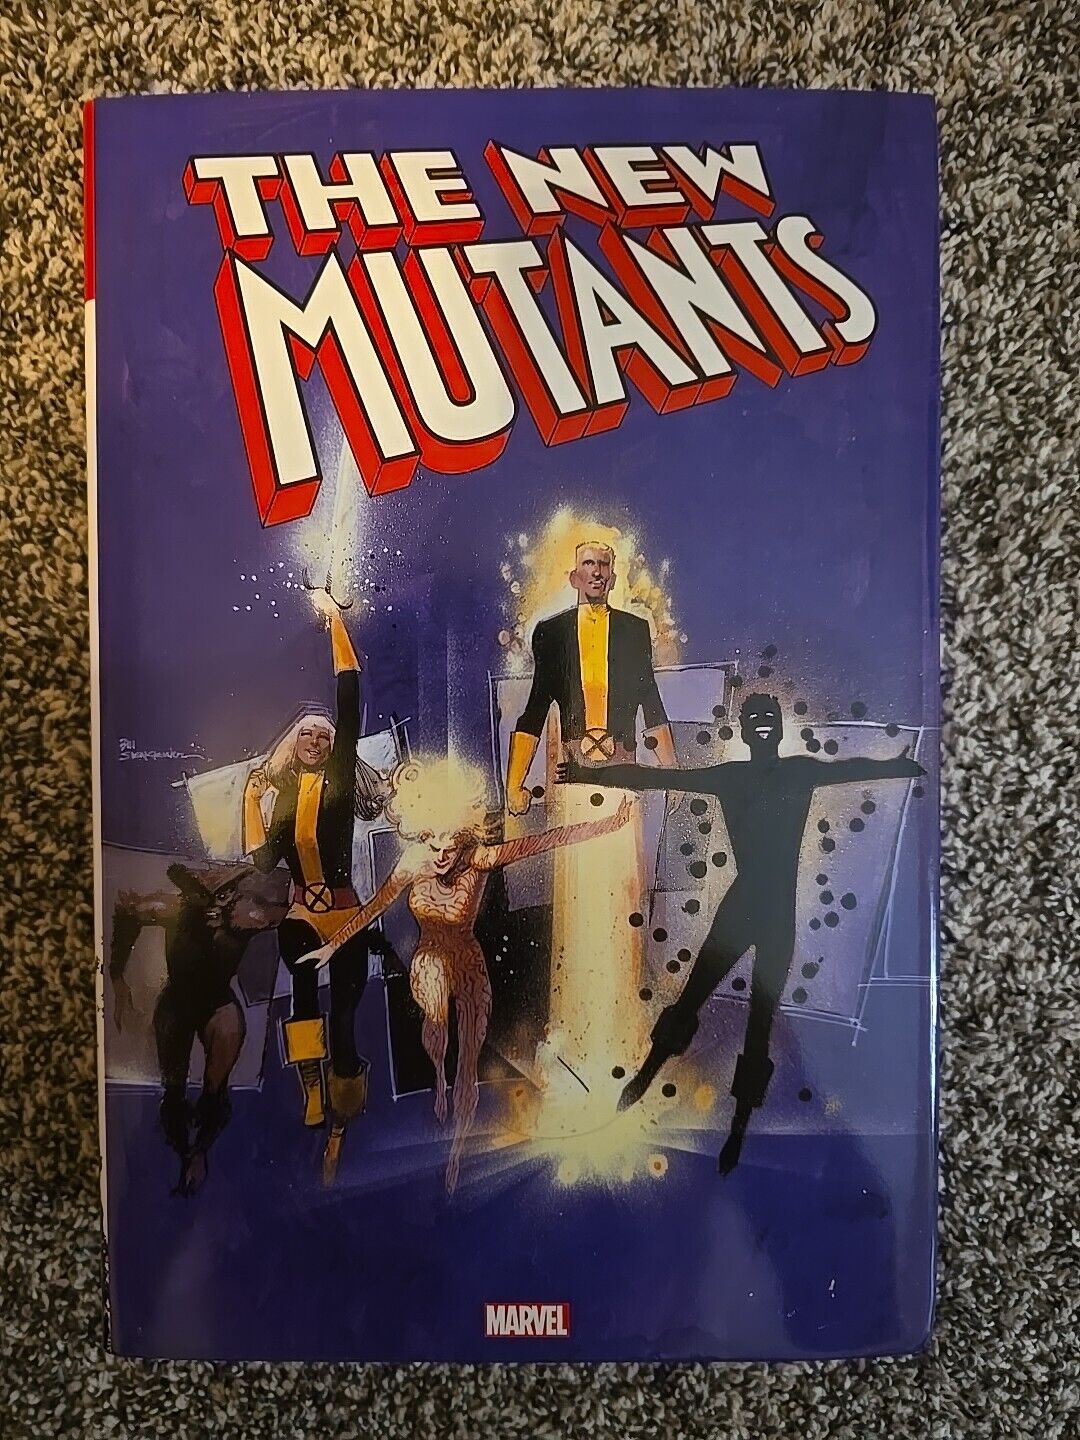 THE NEW MUTANTS Omnibus Vol. 1 Hardcover